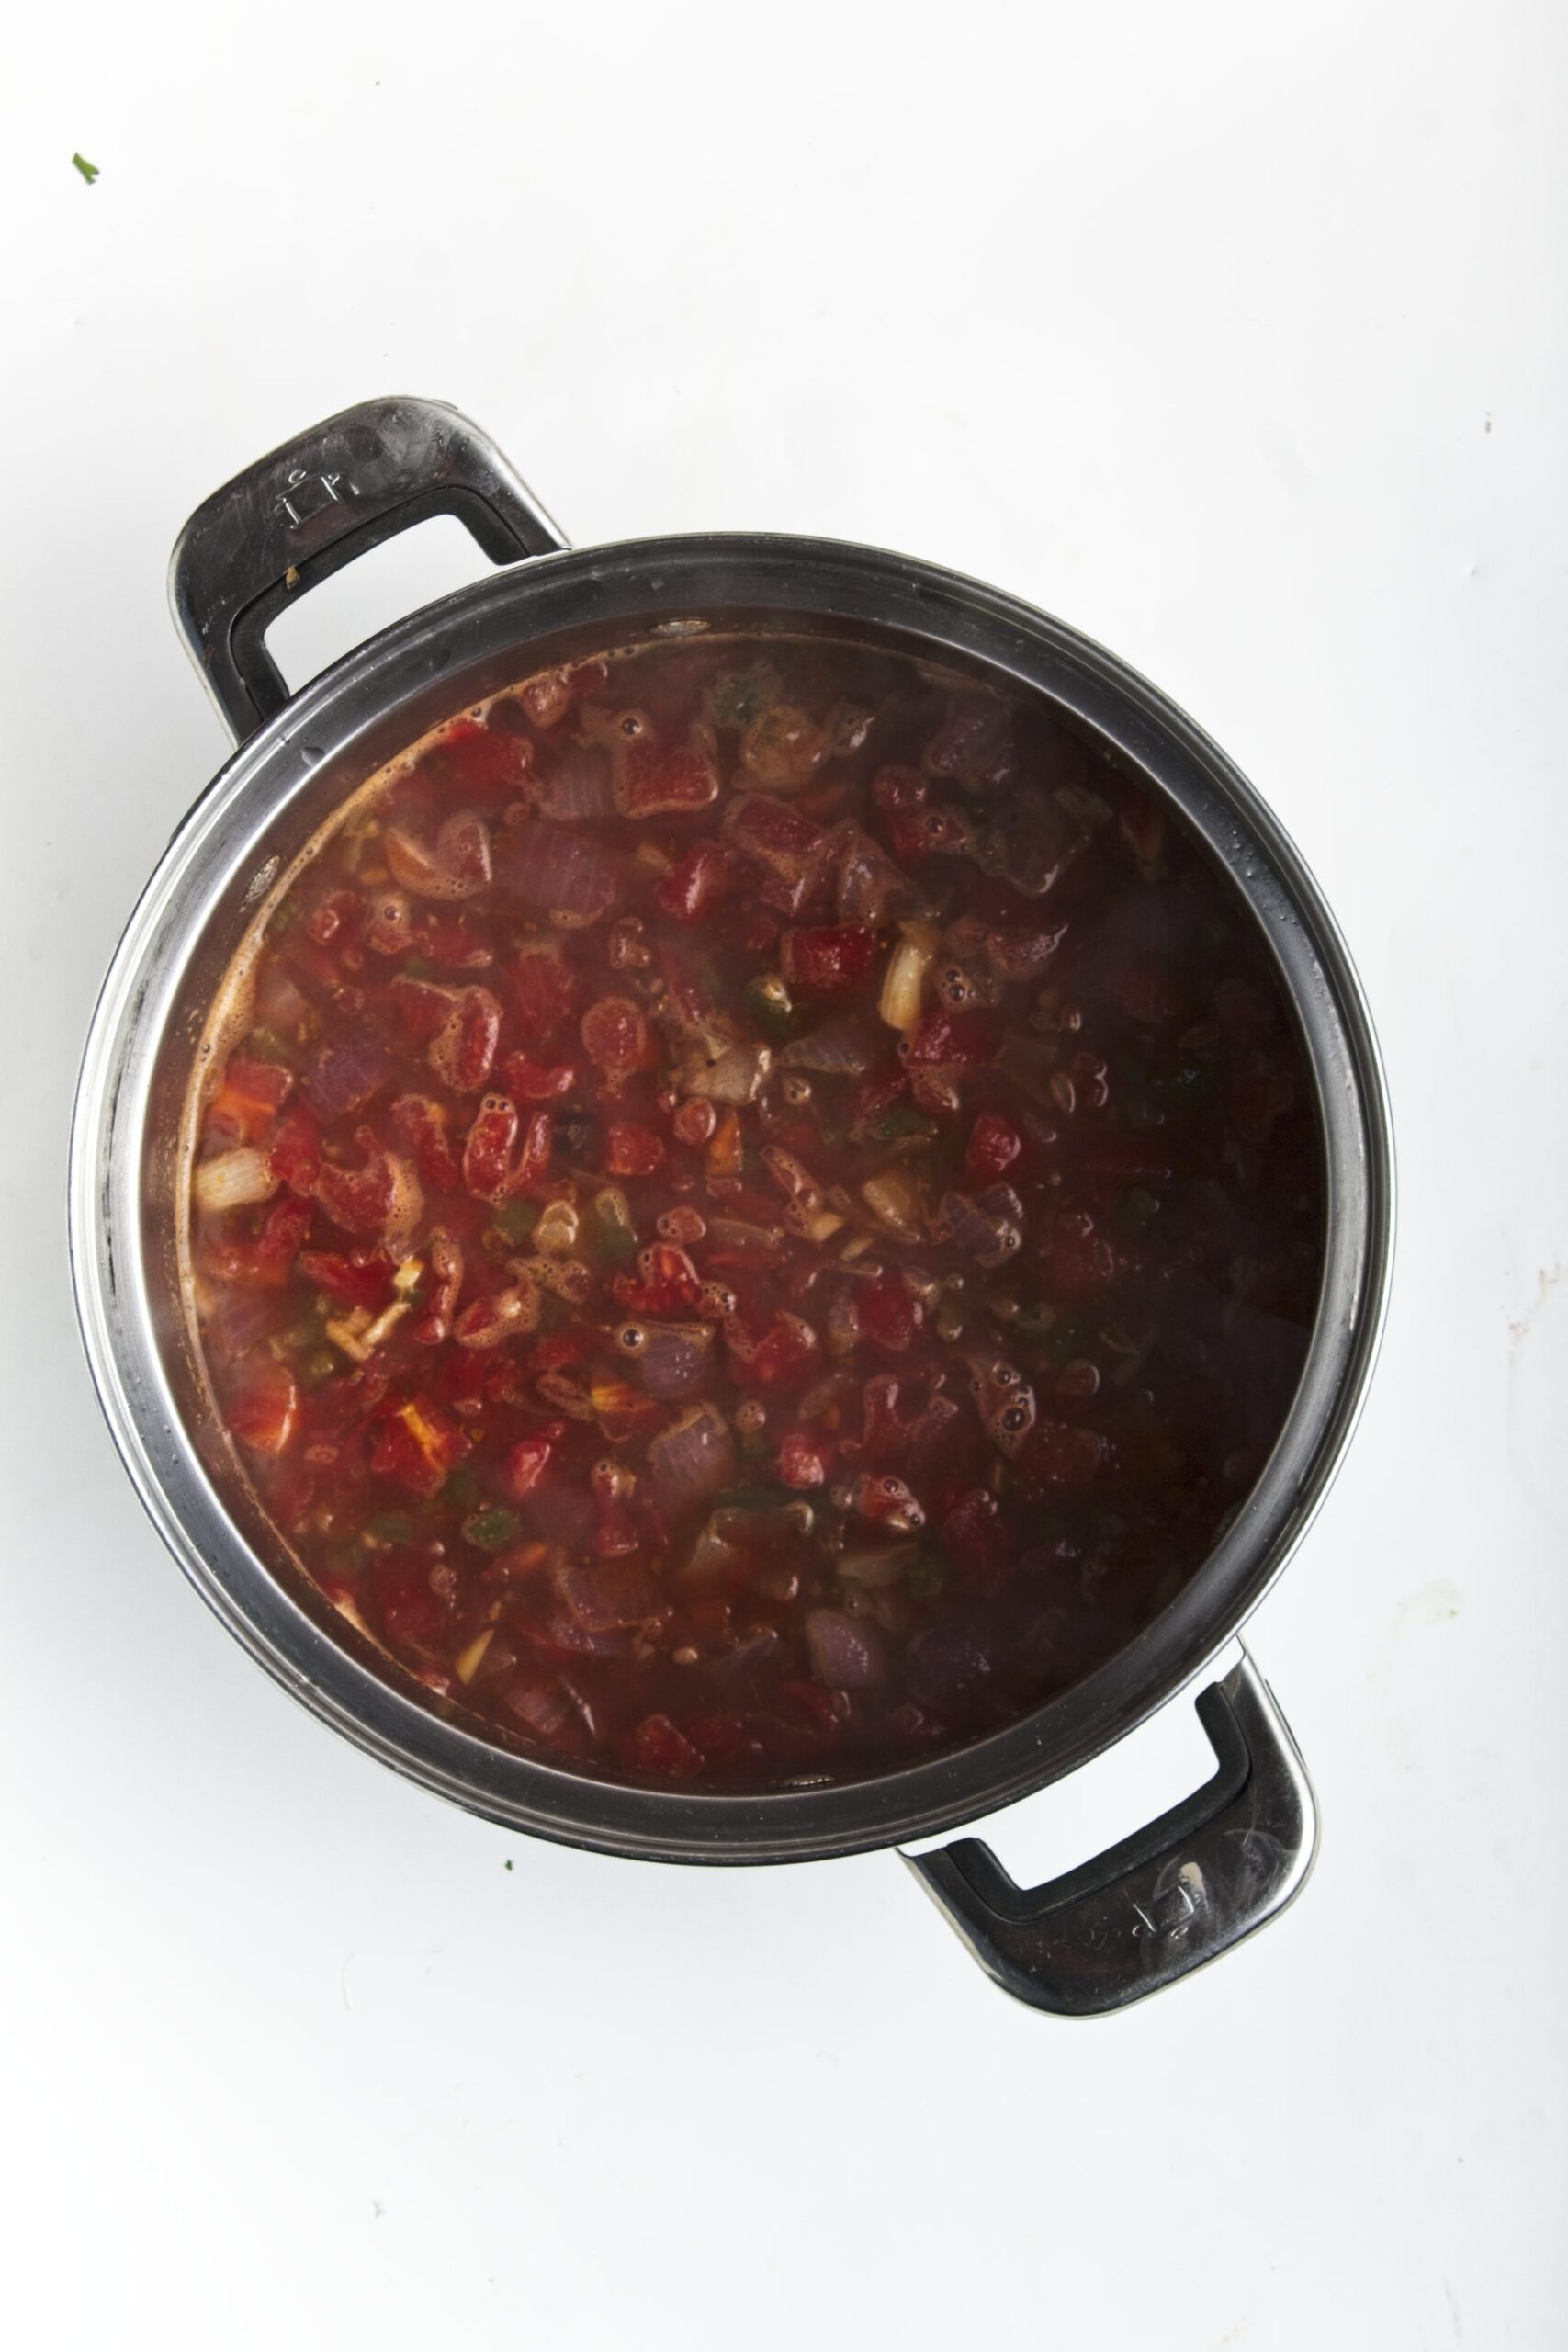 Vegan Tortilla Soup Cooking in a large soup pot